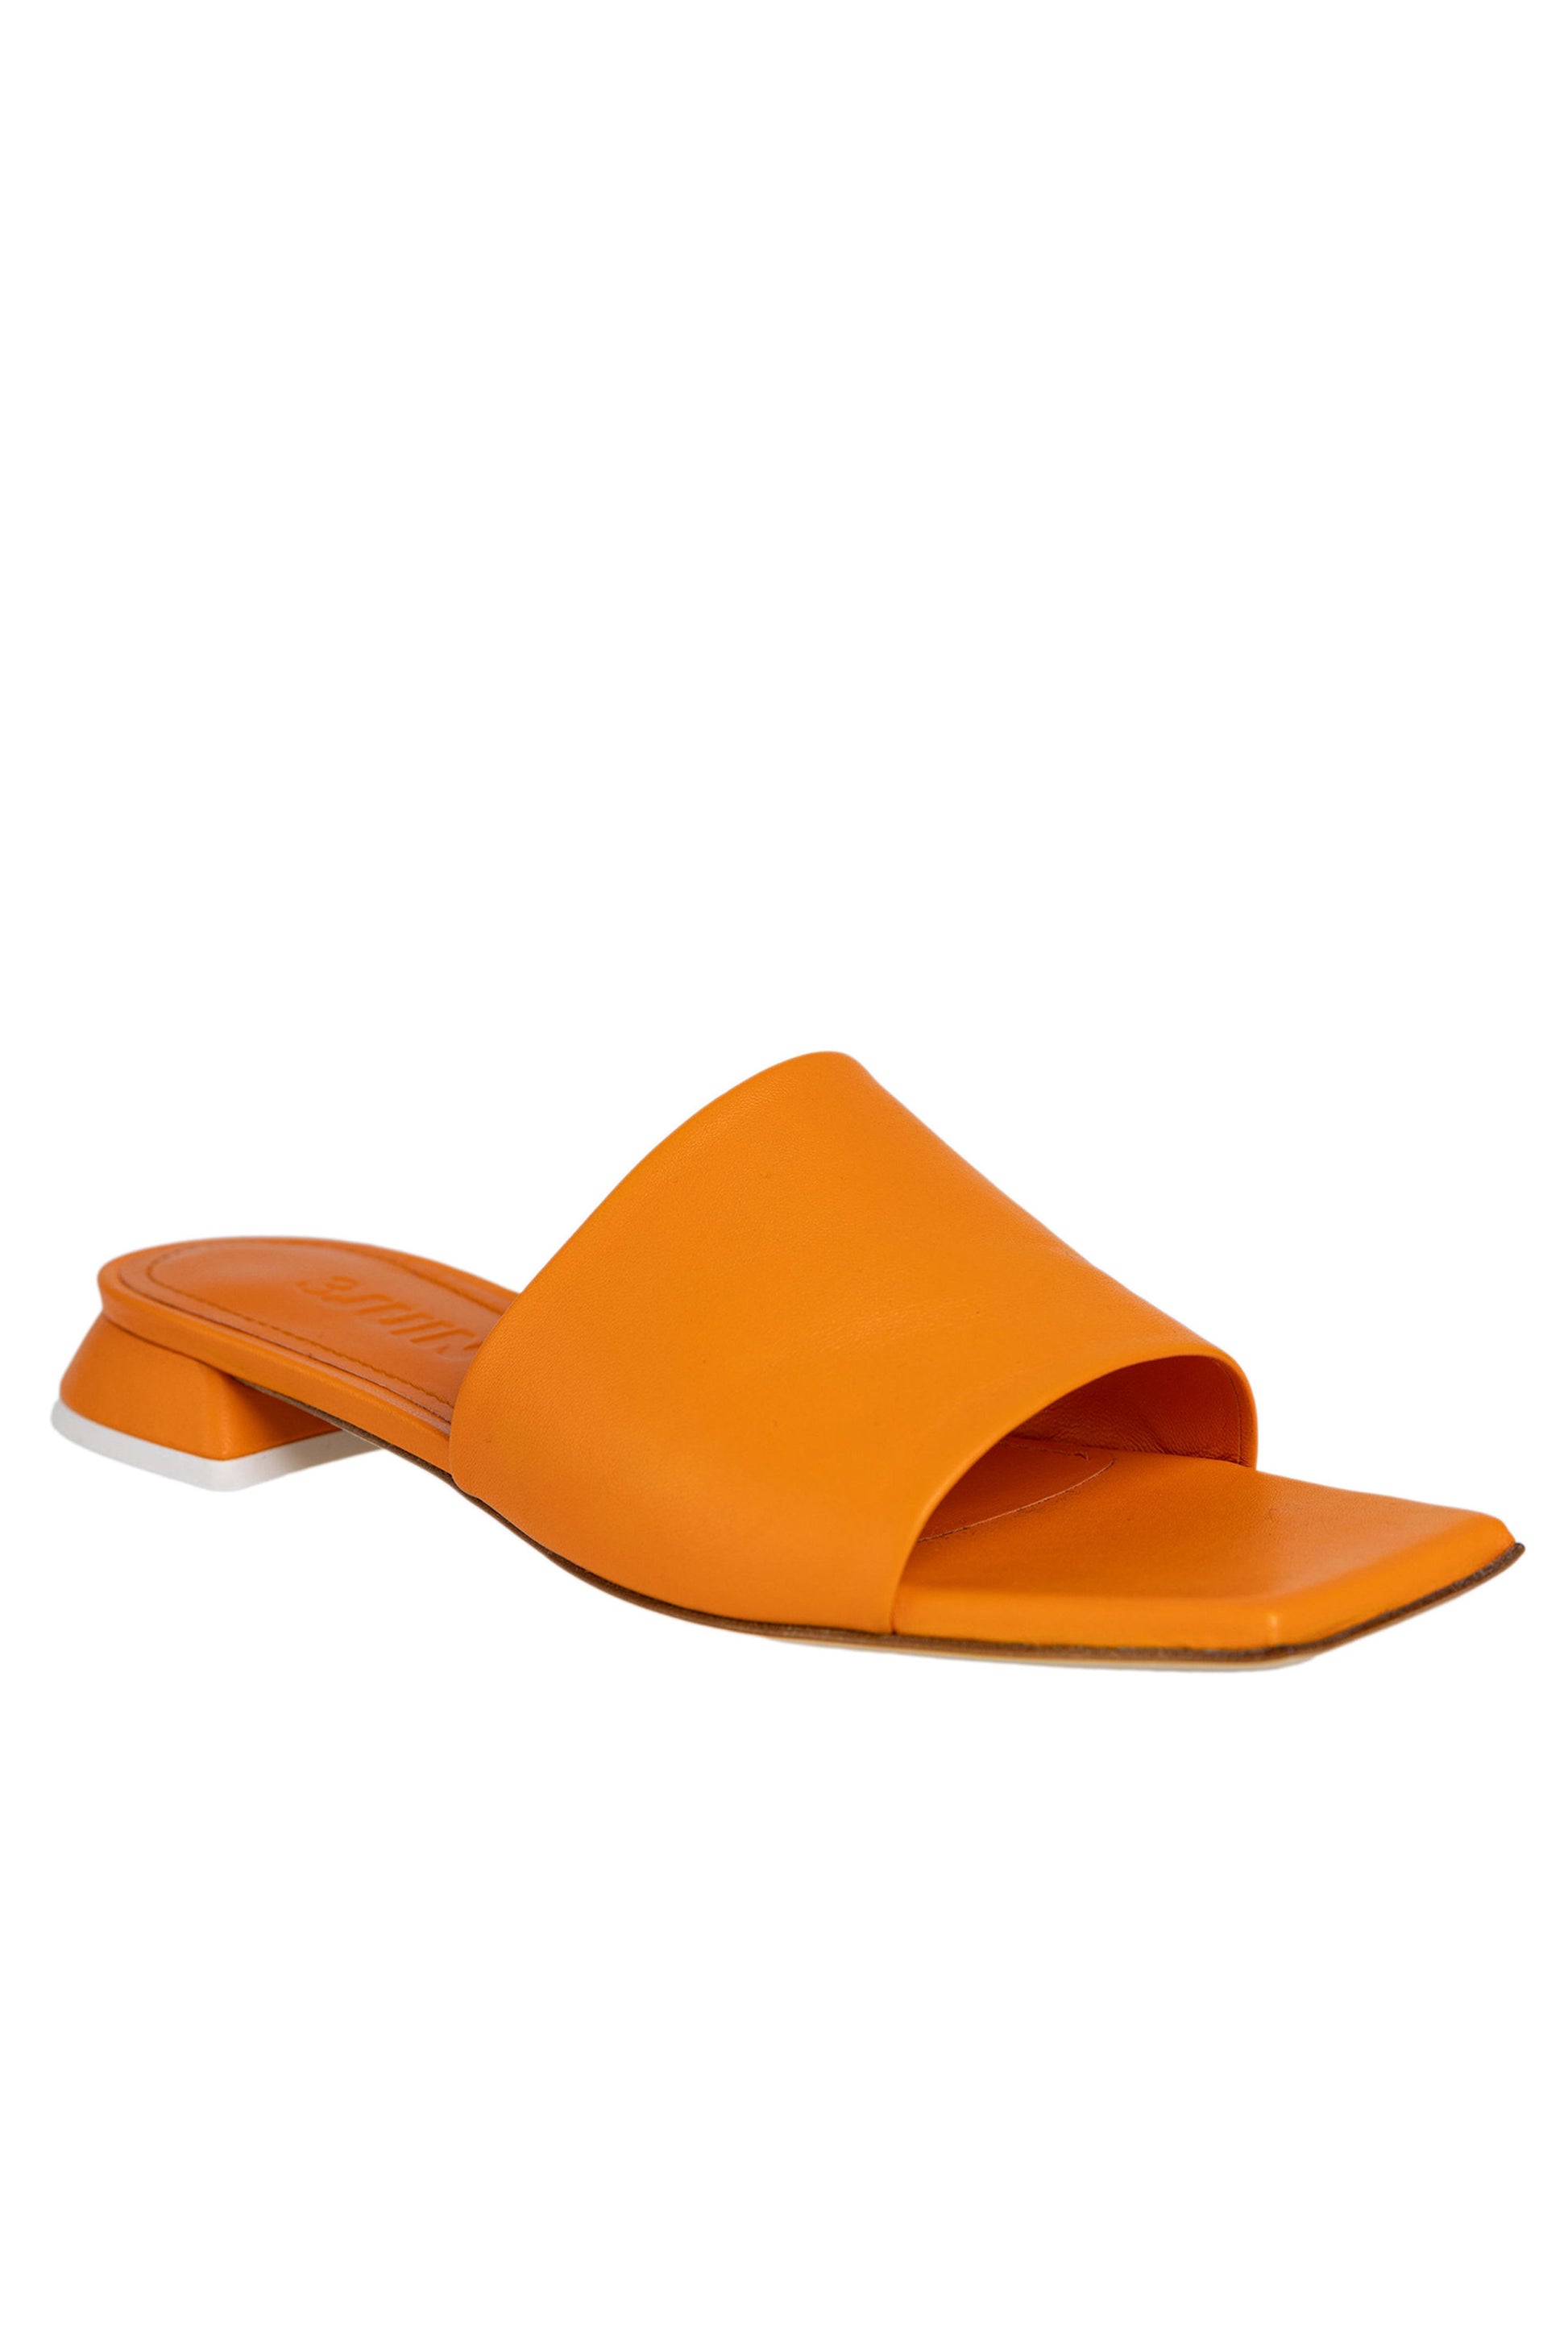 3JUIN Siena Leather Slide in Pulp Orange